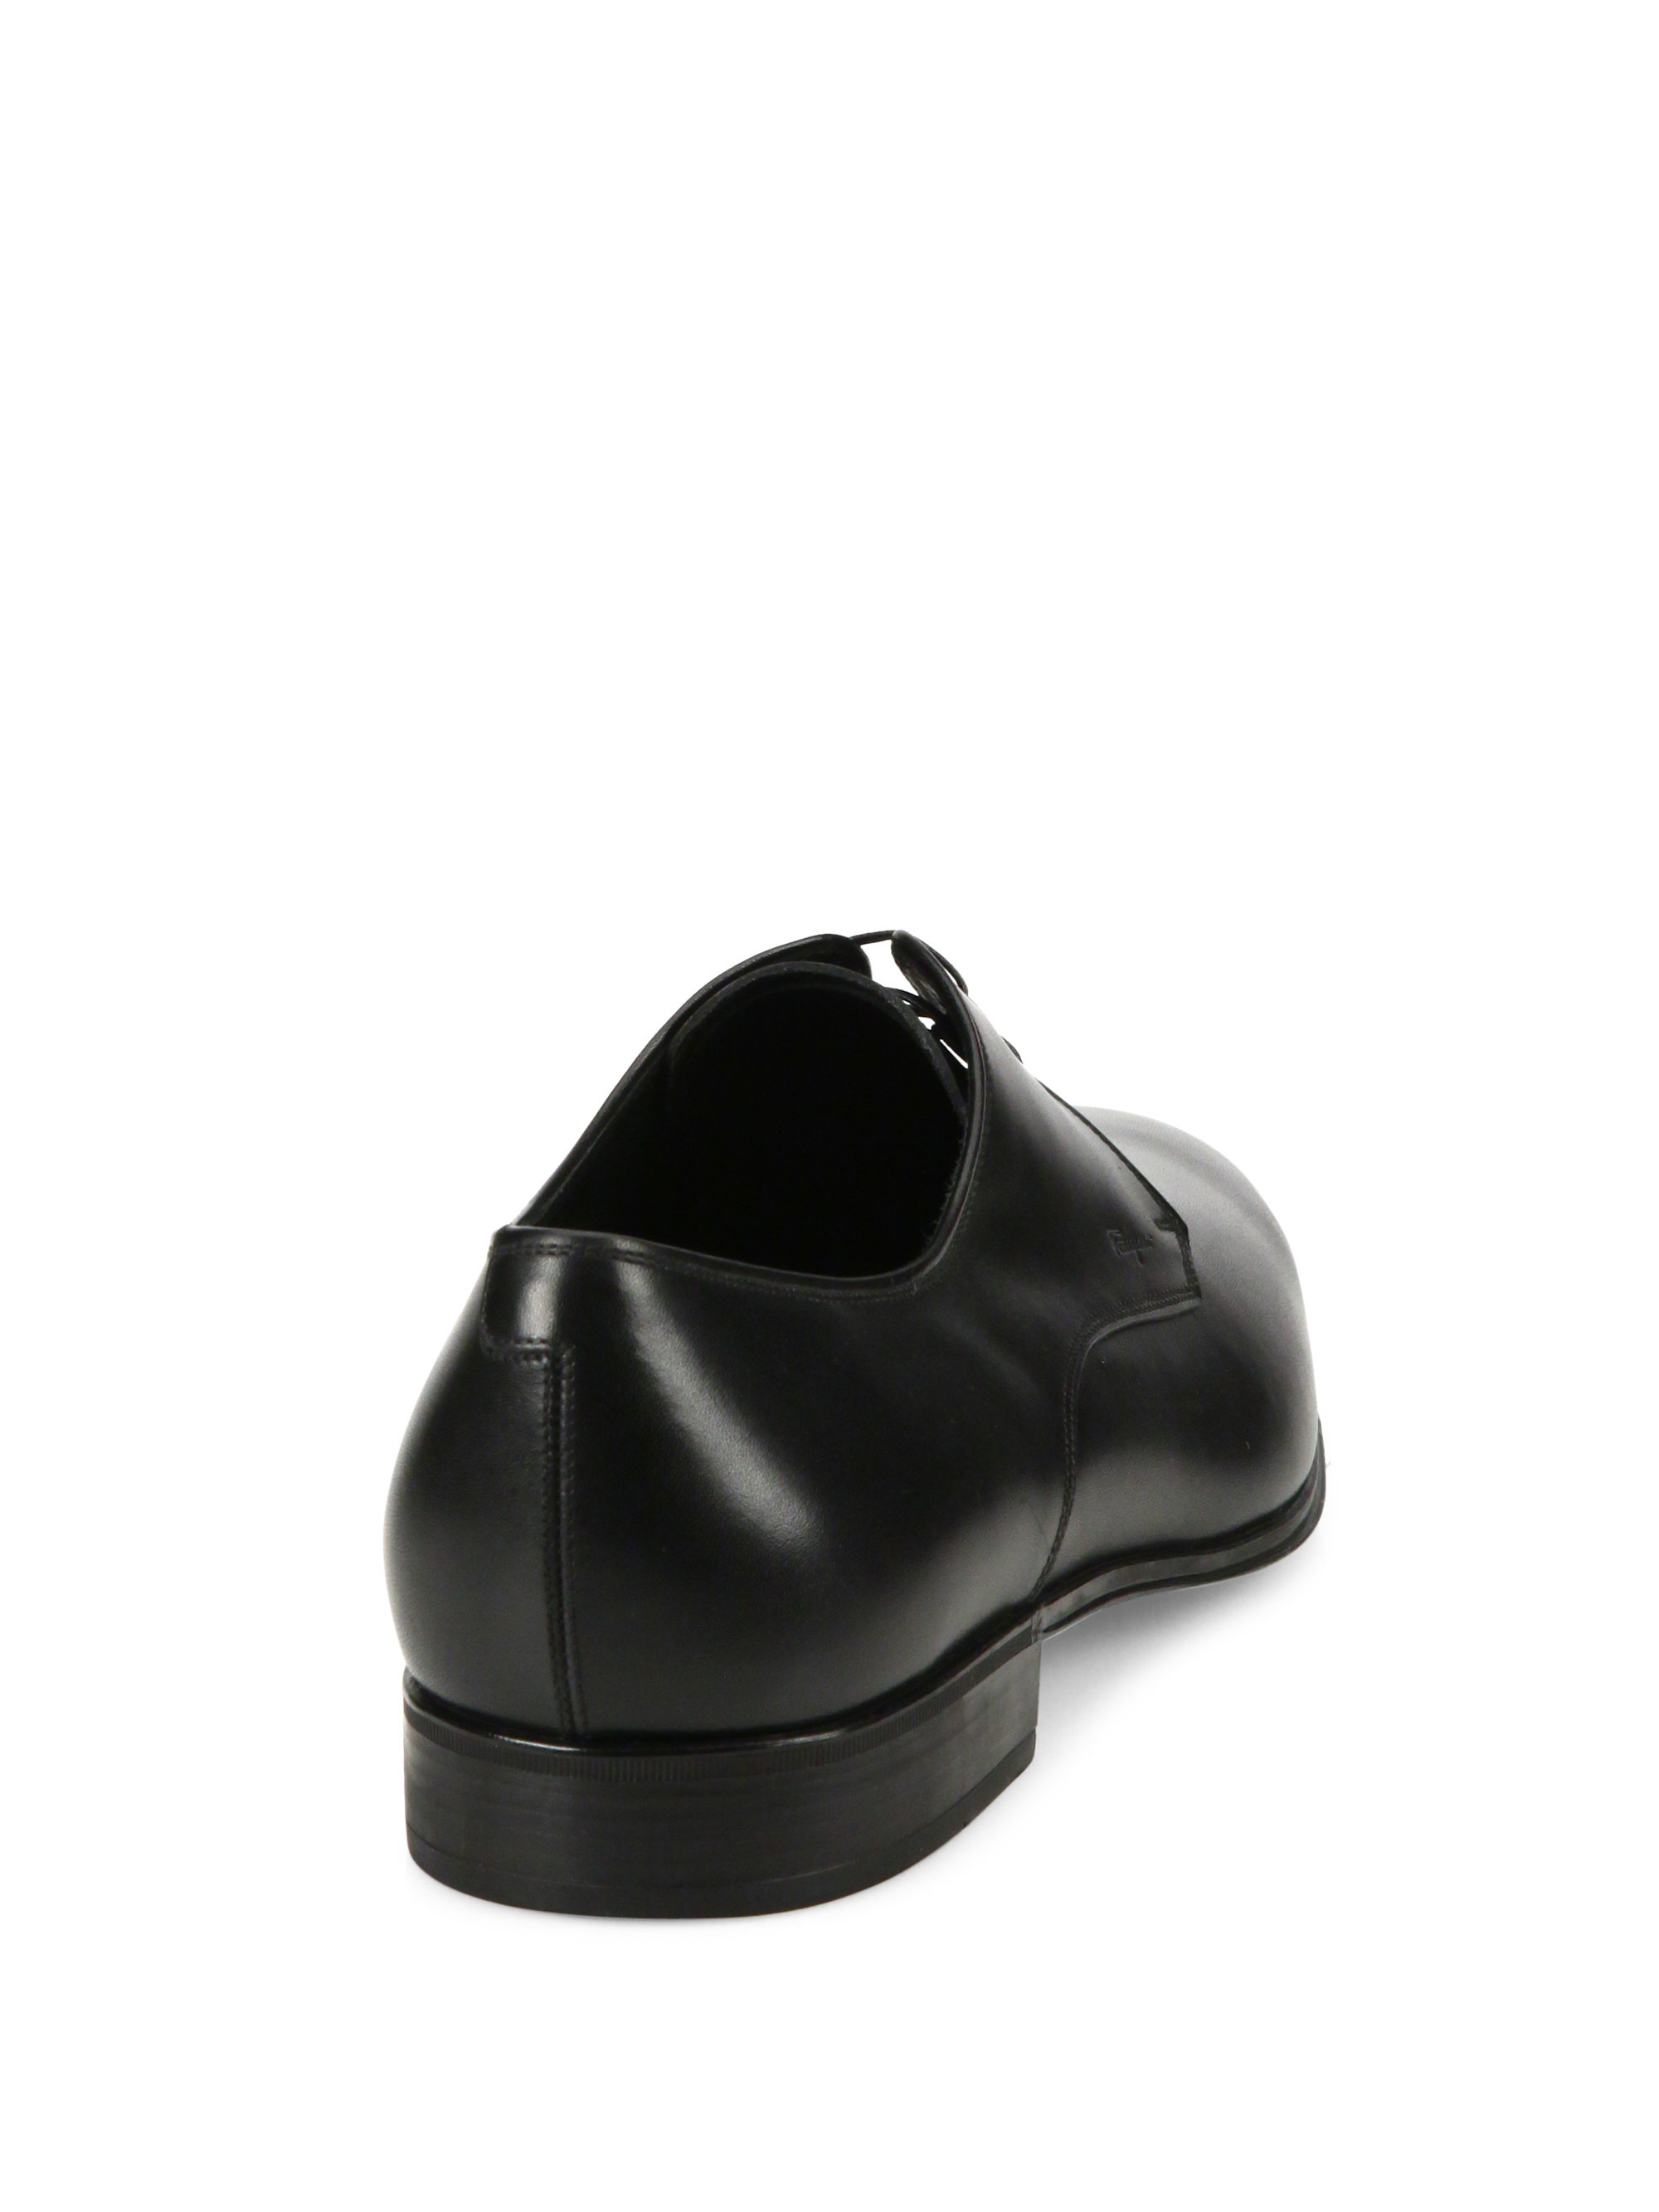 Lyst - Ferragamo Fortunato Leather Derby Shoes for Men